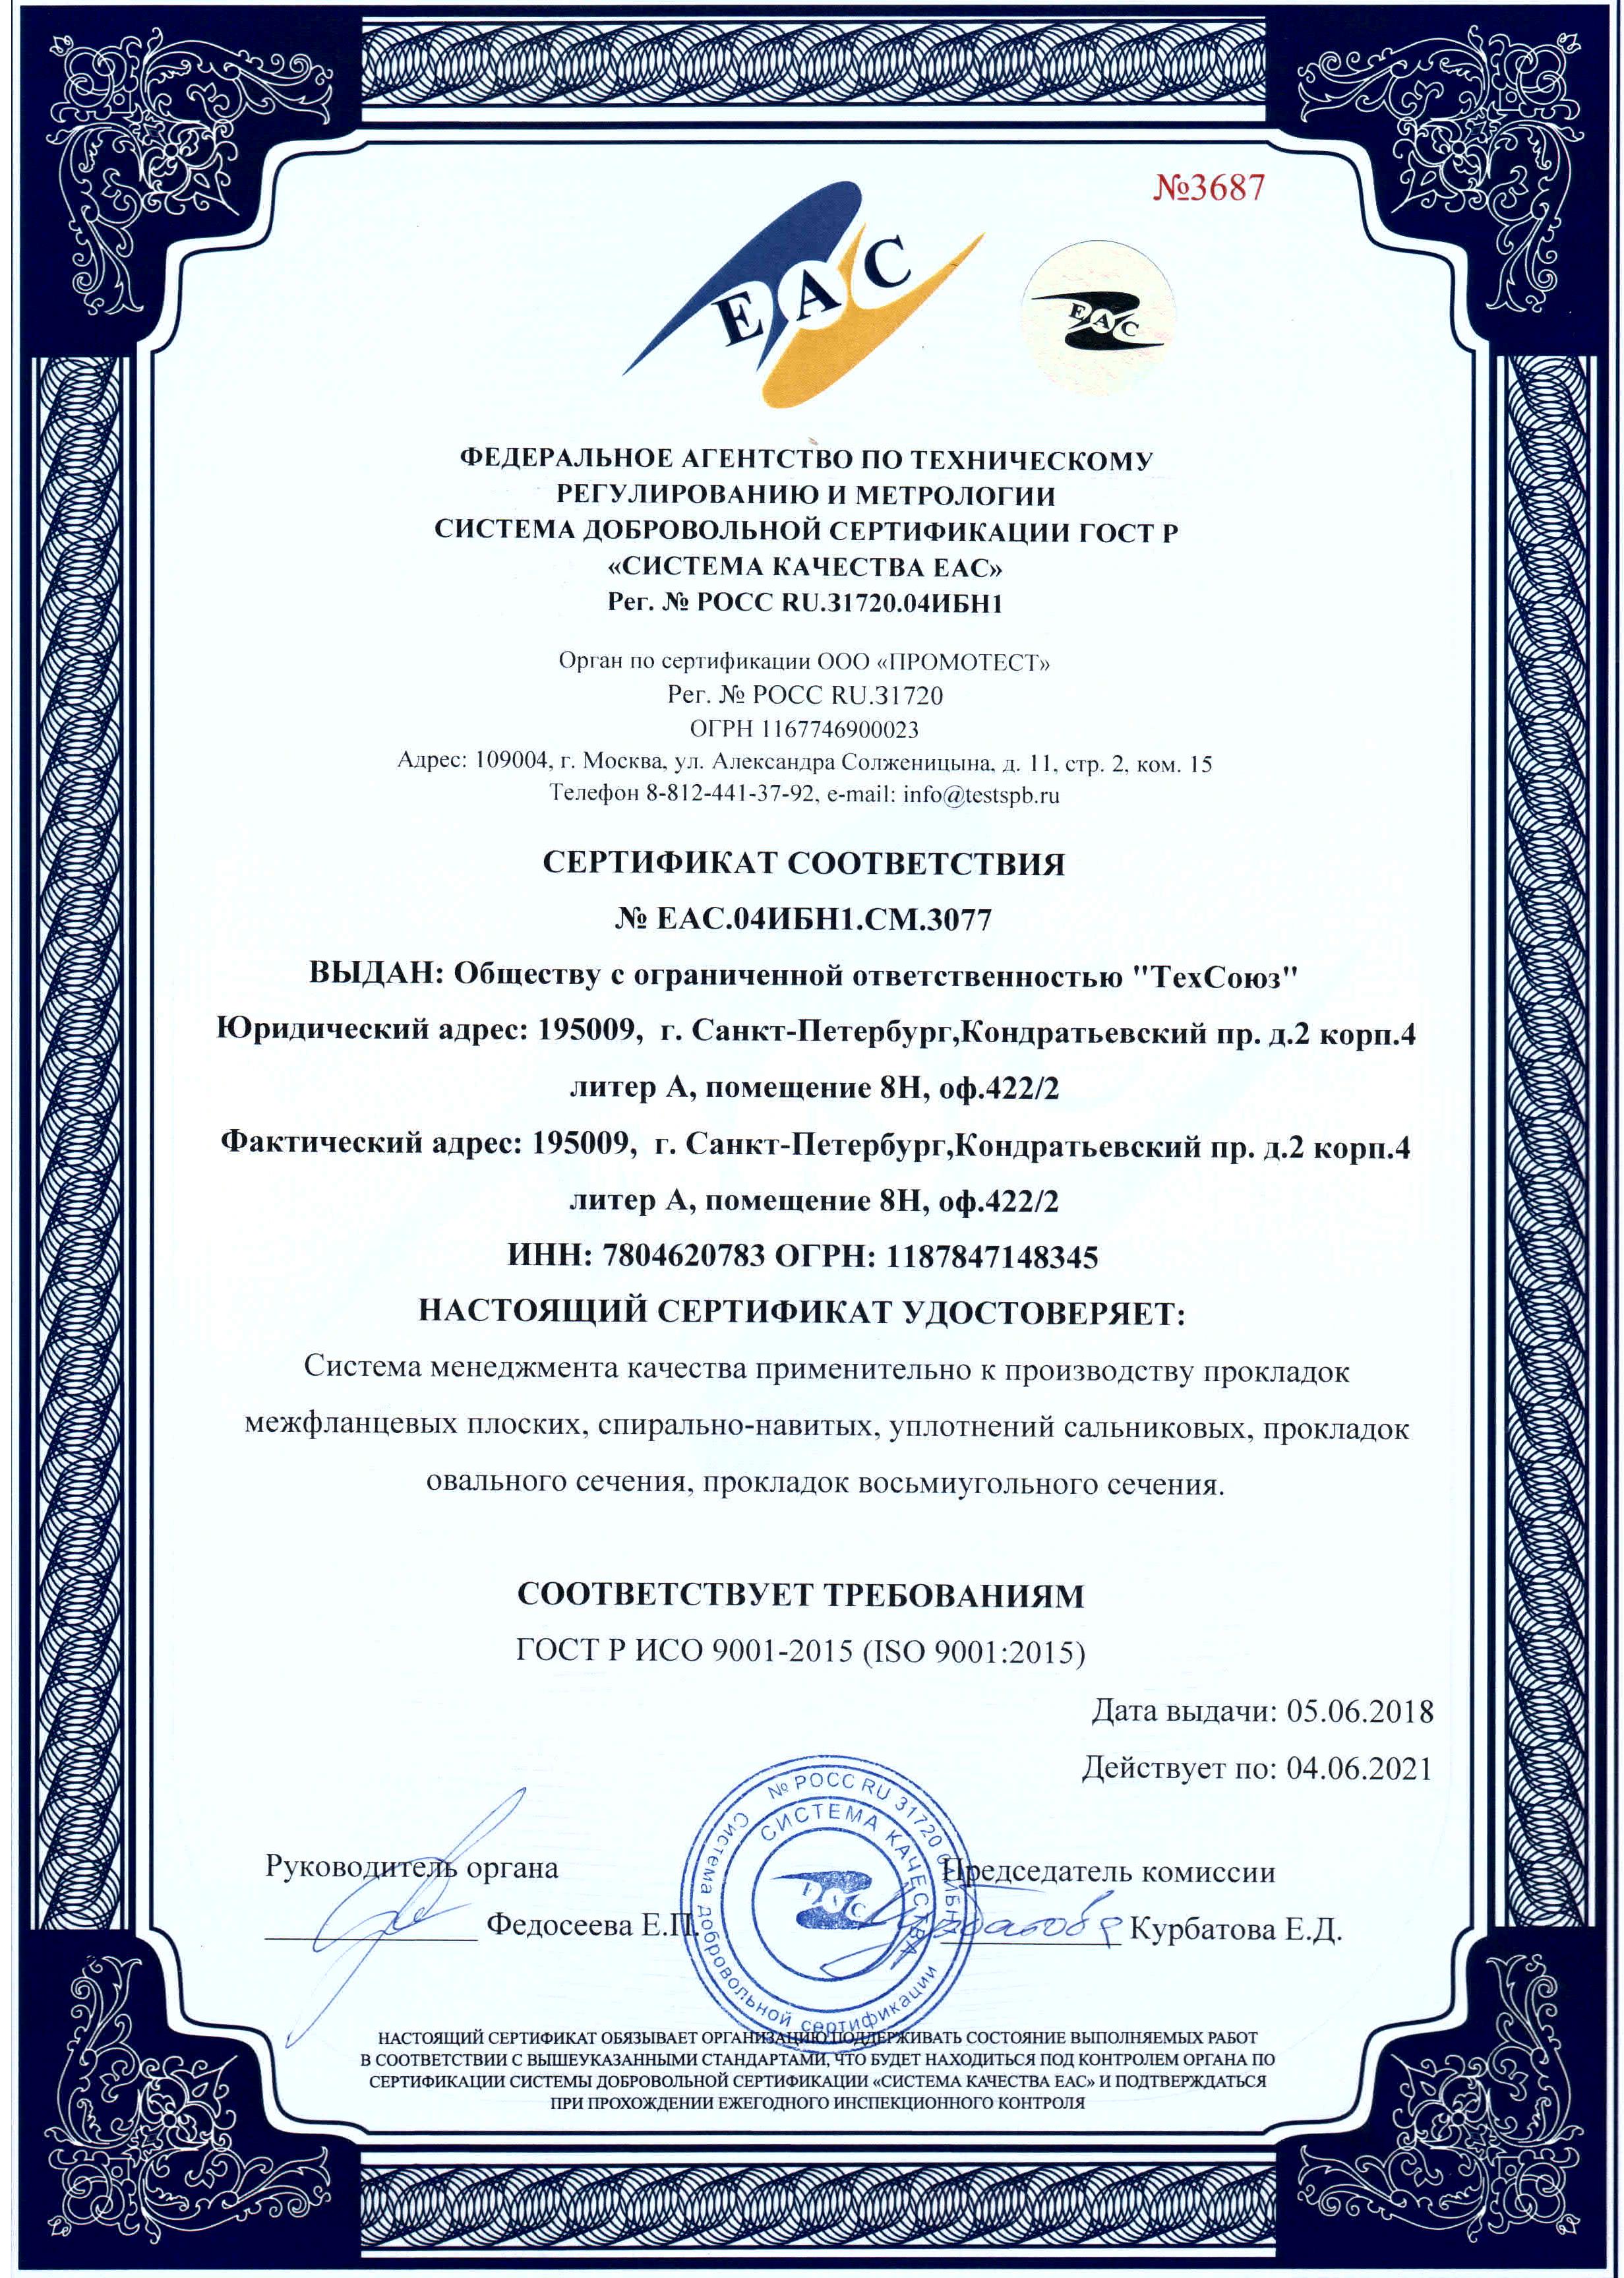 Сертификат соответствия по стандарту ISO